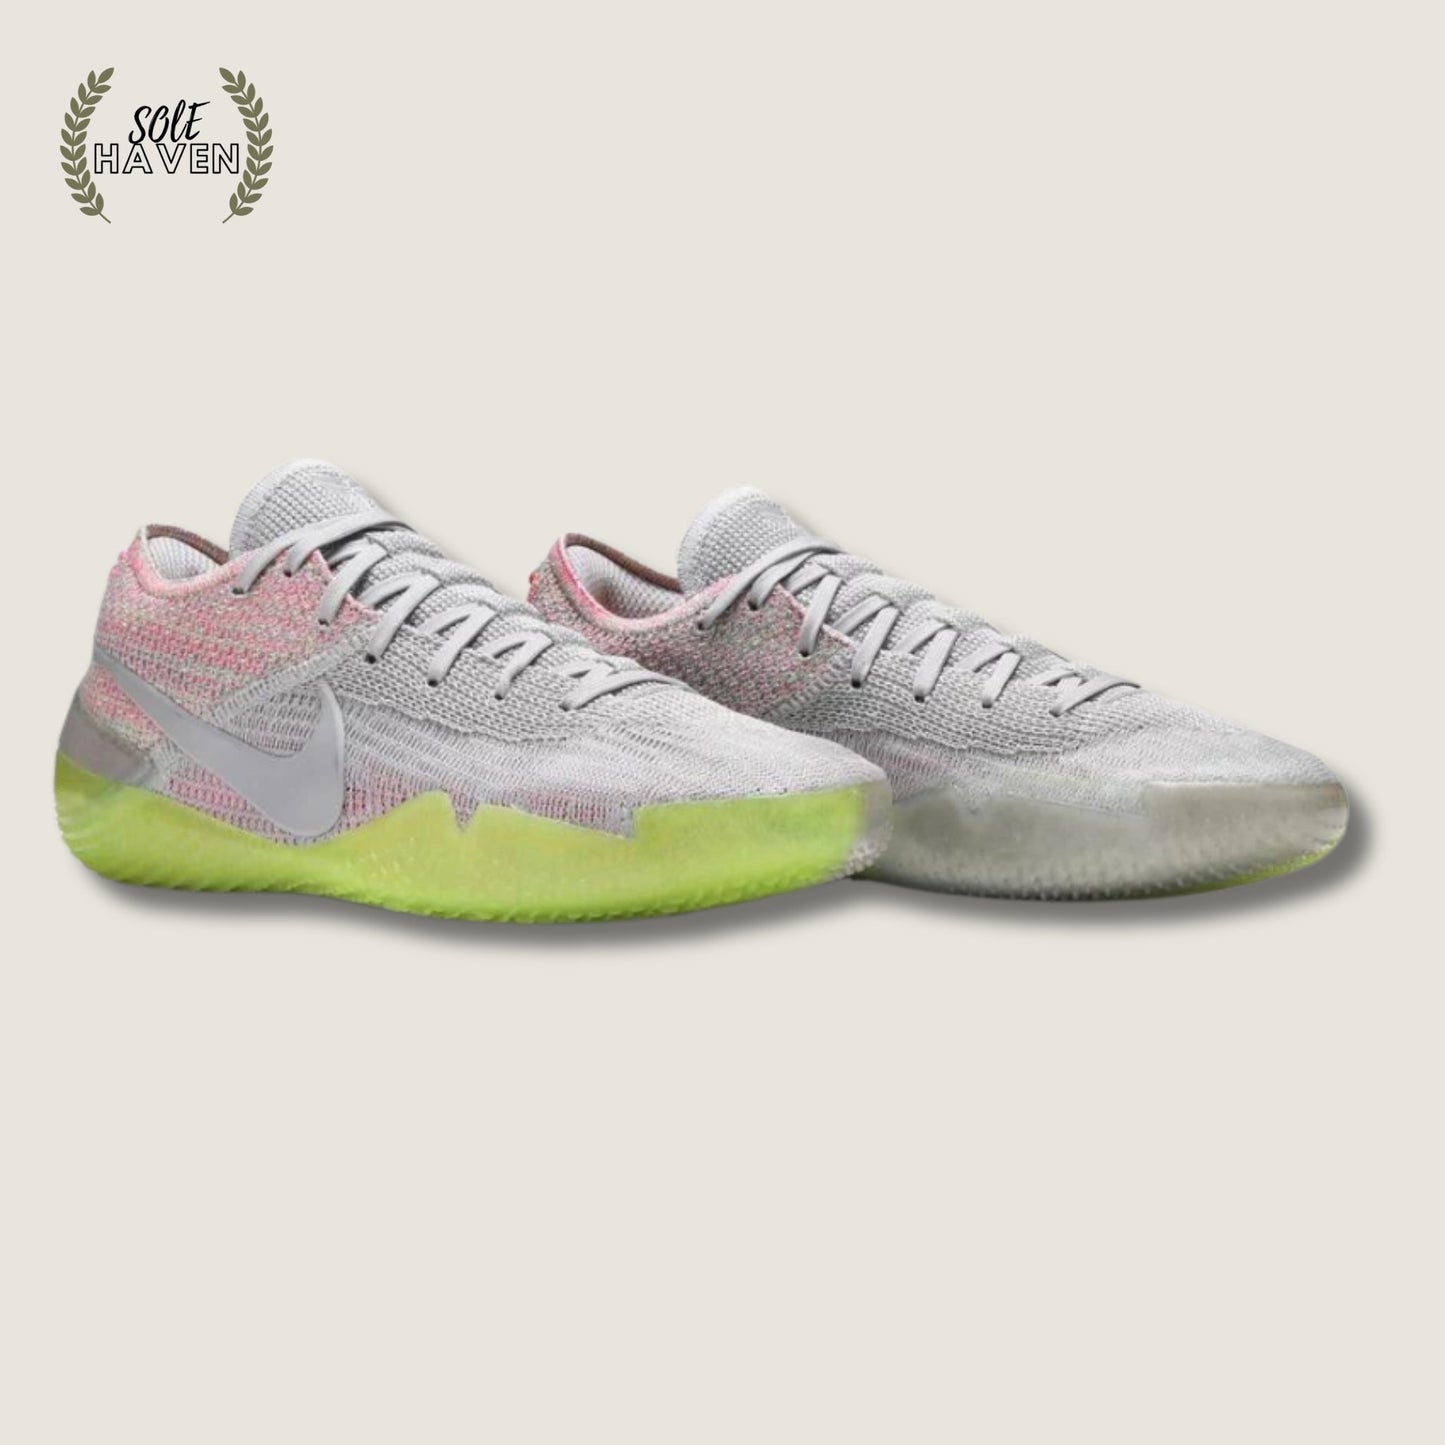 Nike Kobe NXT 360 Multi-Color - Sole HavenShoesNike